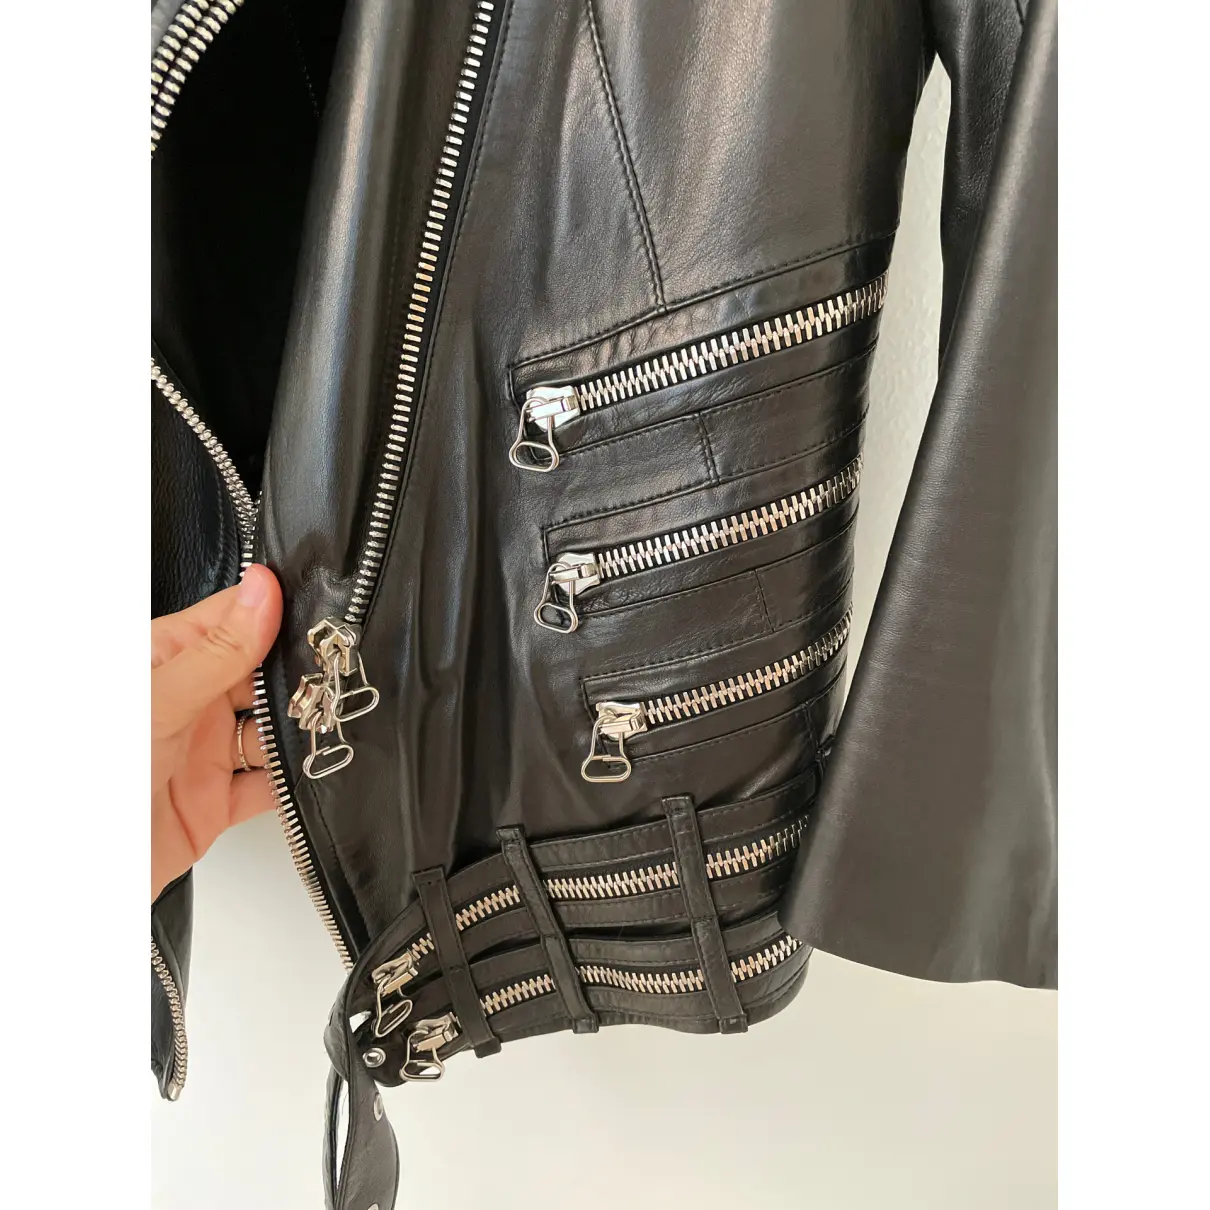 Buy Balmain Leather jacket online